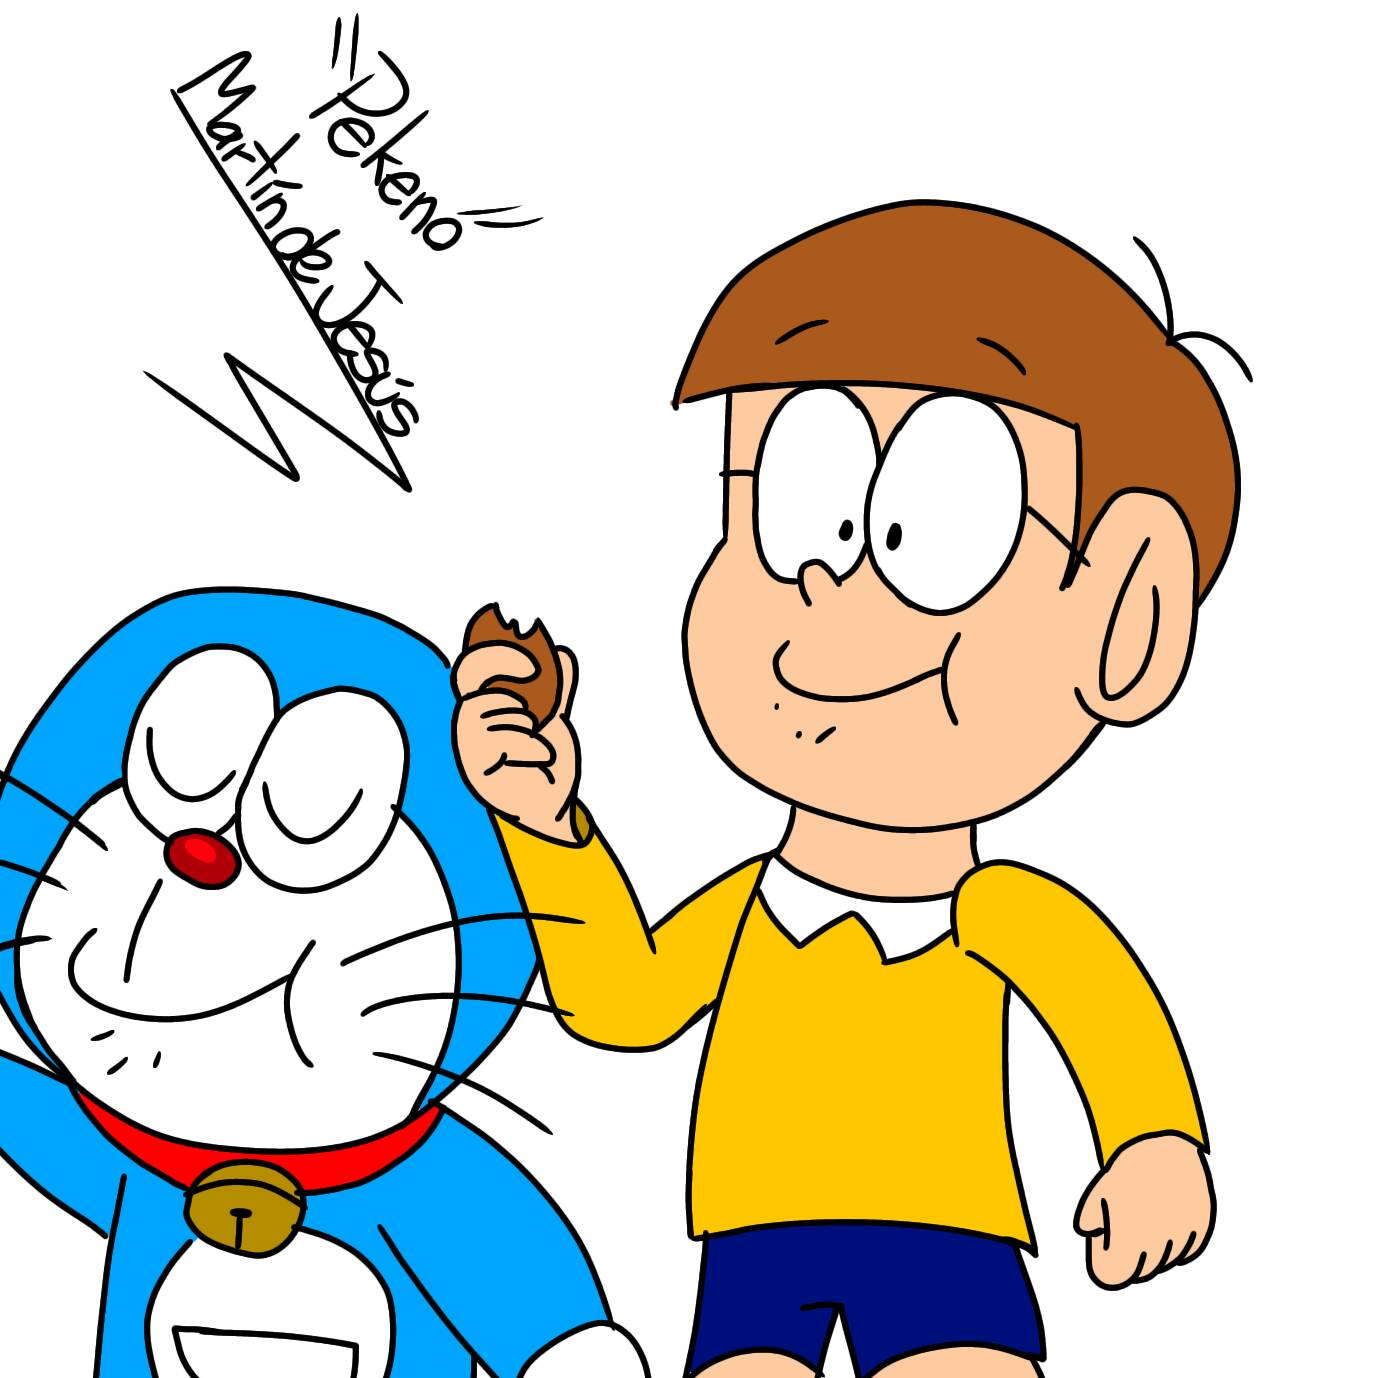 Doraemon y Nobita by PekenoStudios on DeviantArt